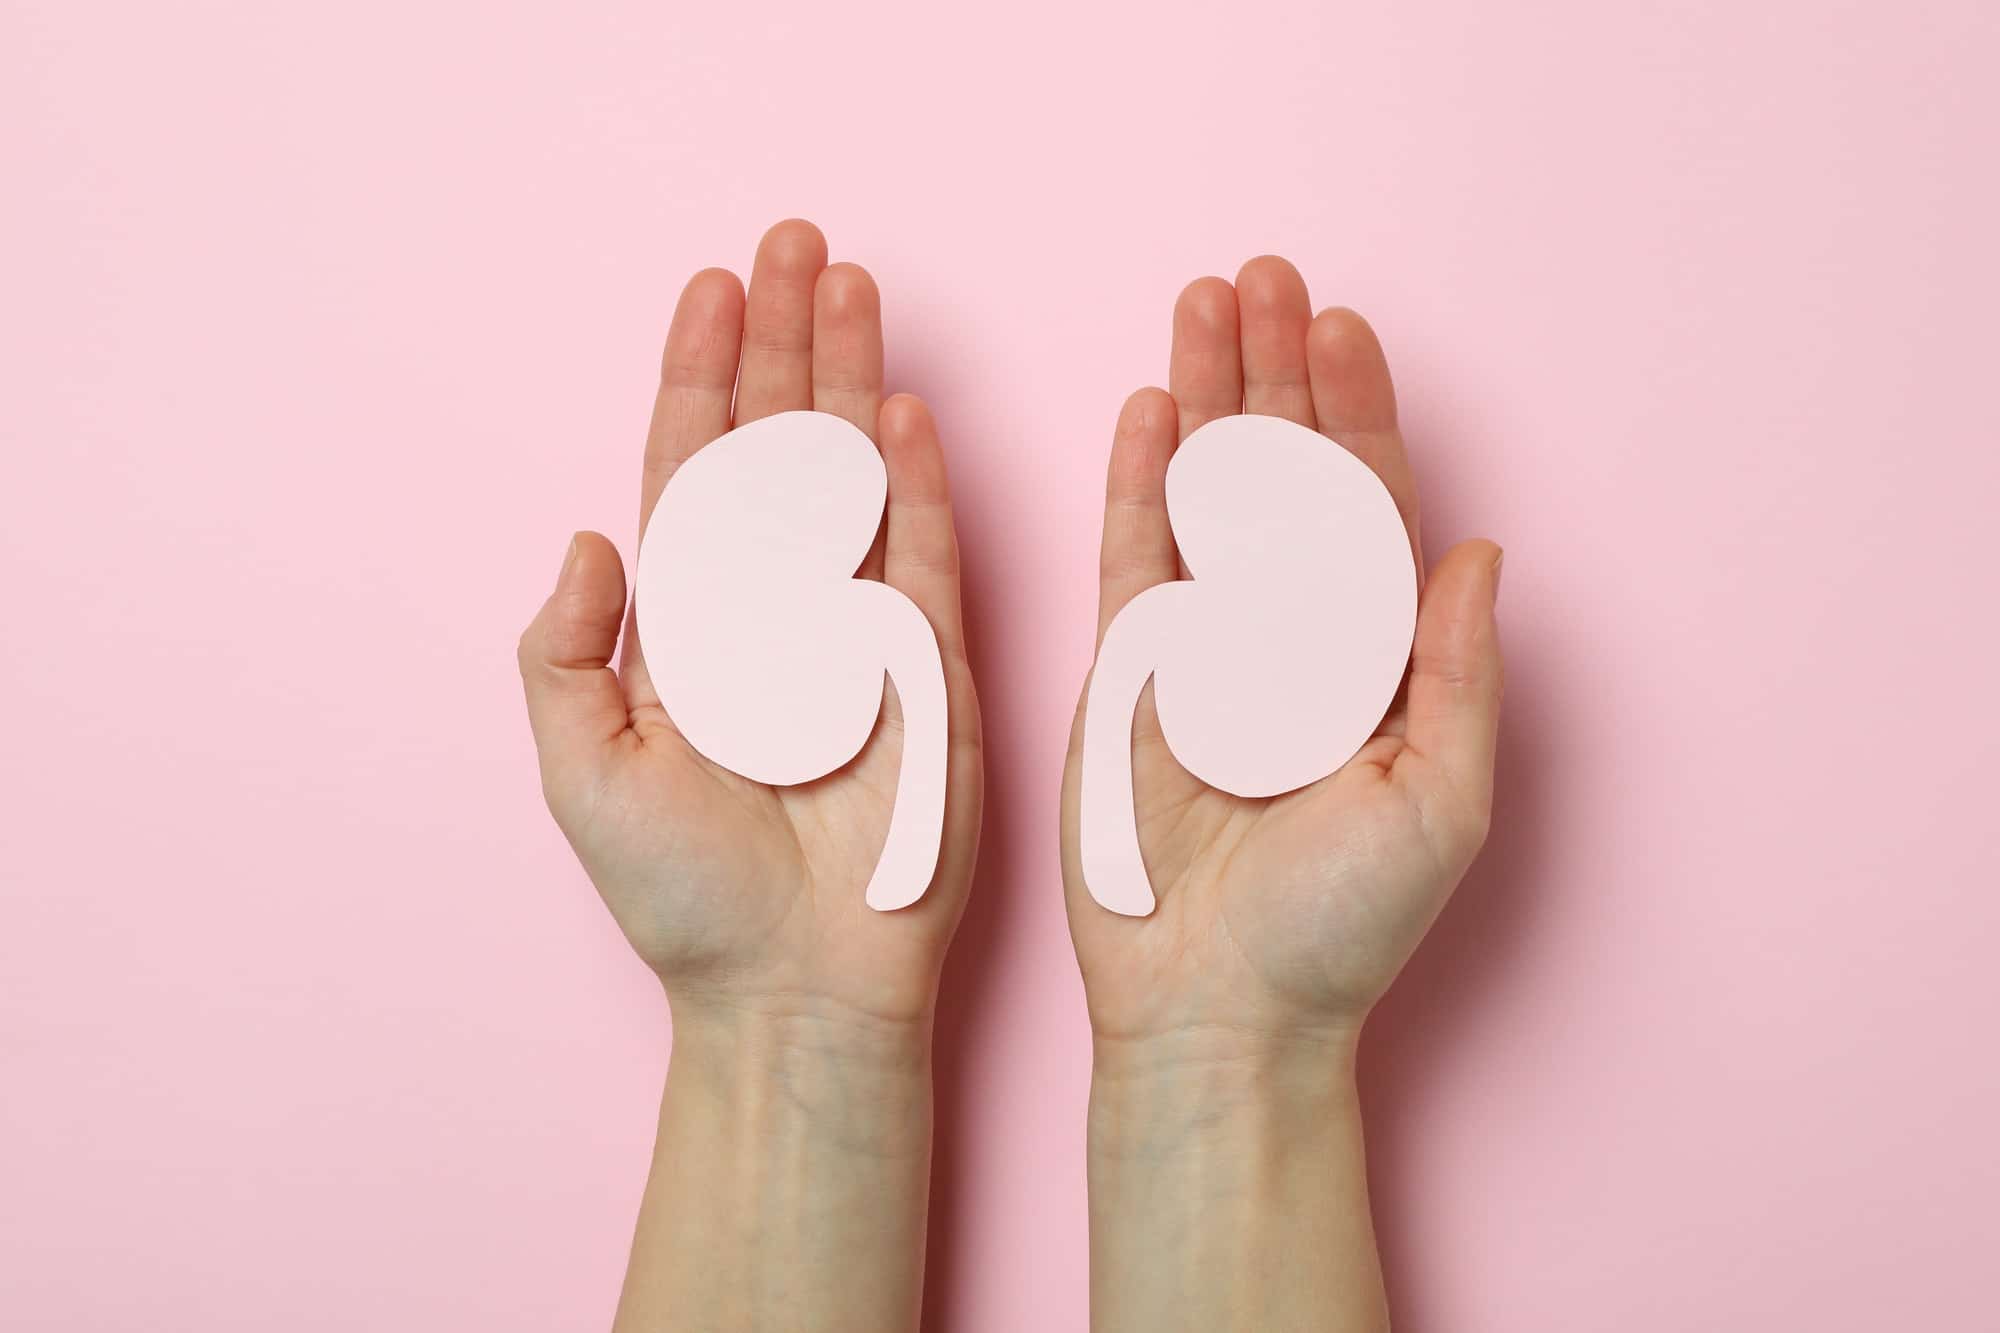 Female hands hold paper kidneys on pink background